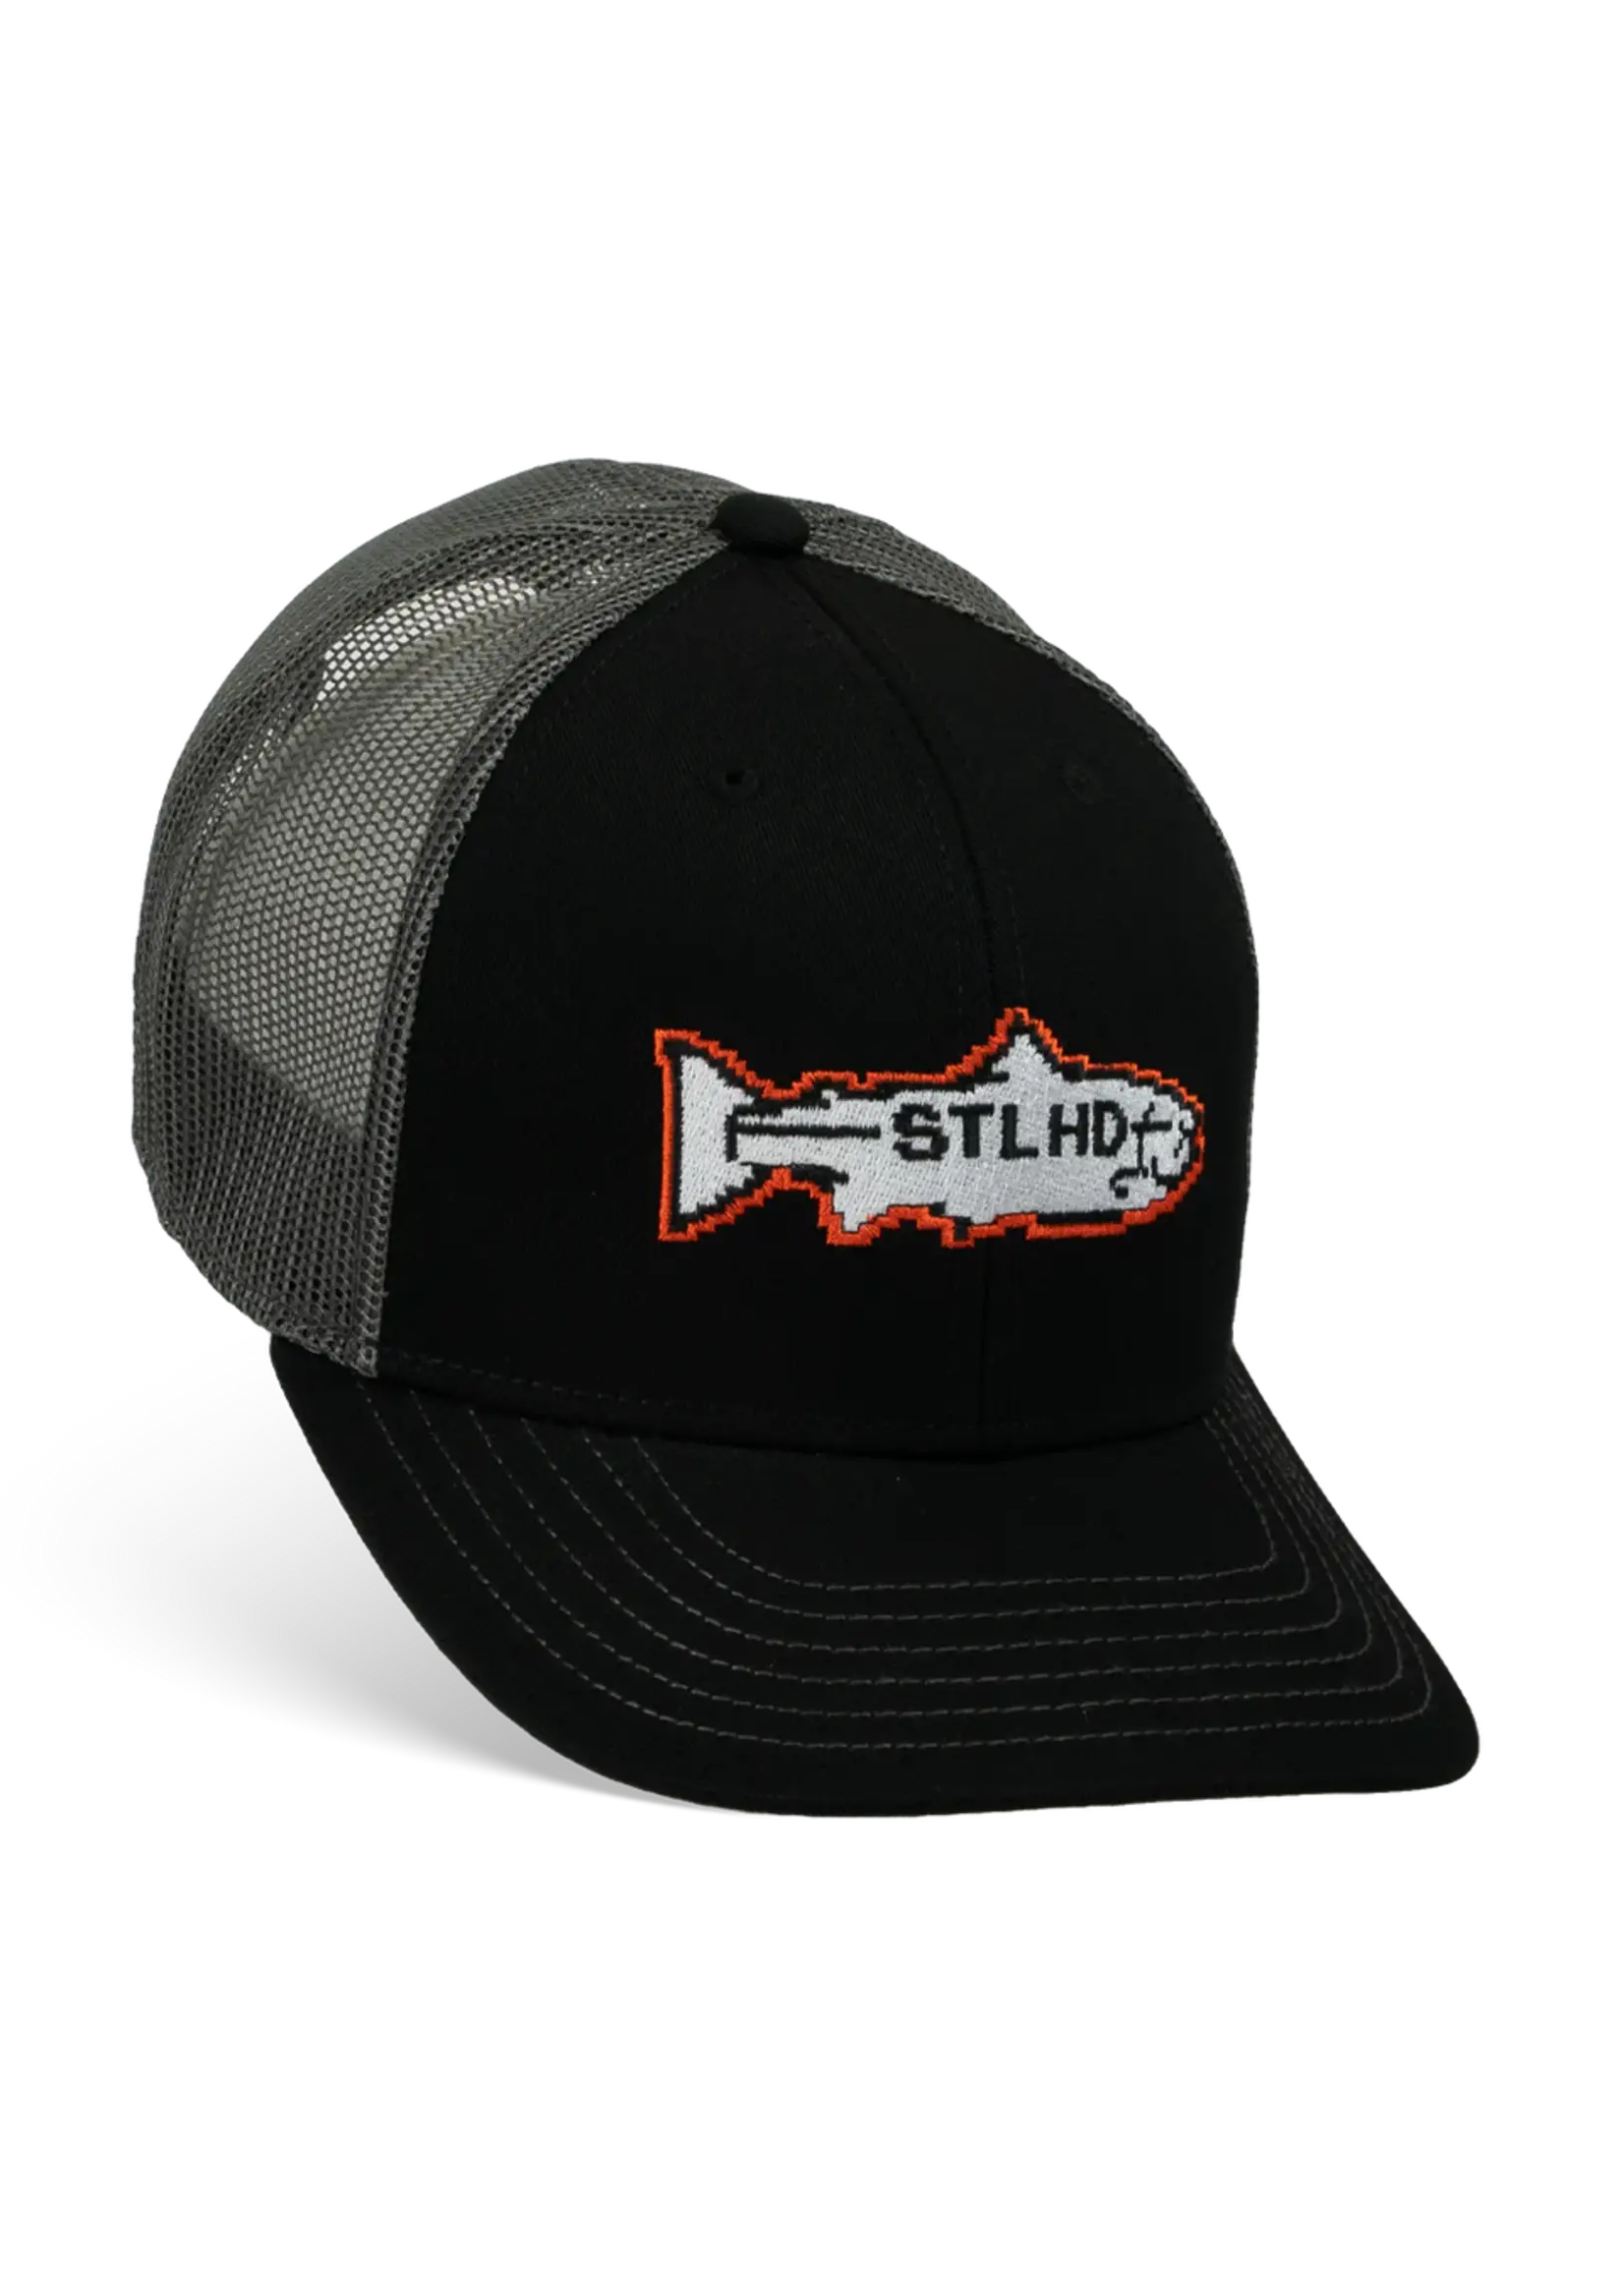 STLHD Gear STLHD 1-Up Snapback Trucker Hat Black/Charcoal